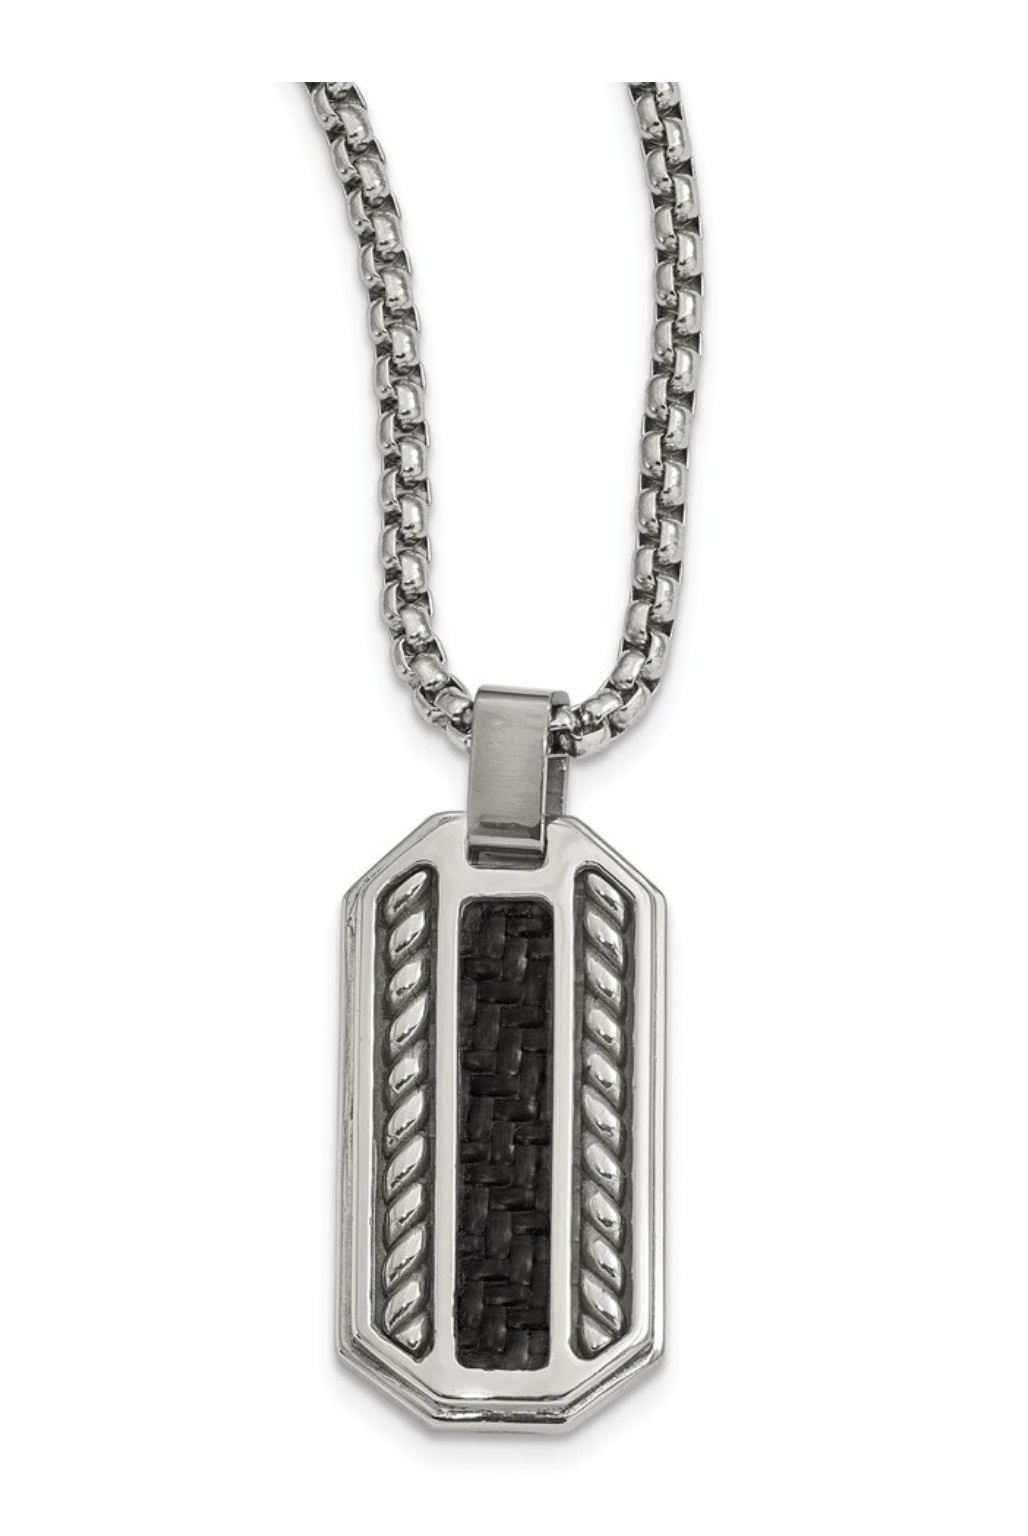  Stainless Steel Black Carbon Fiber Dog Tag Pendant Necklace, 20